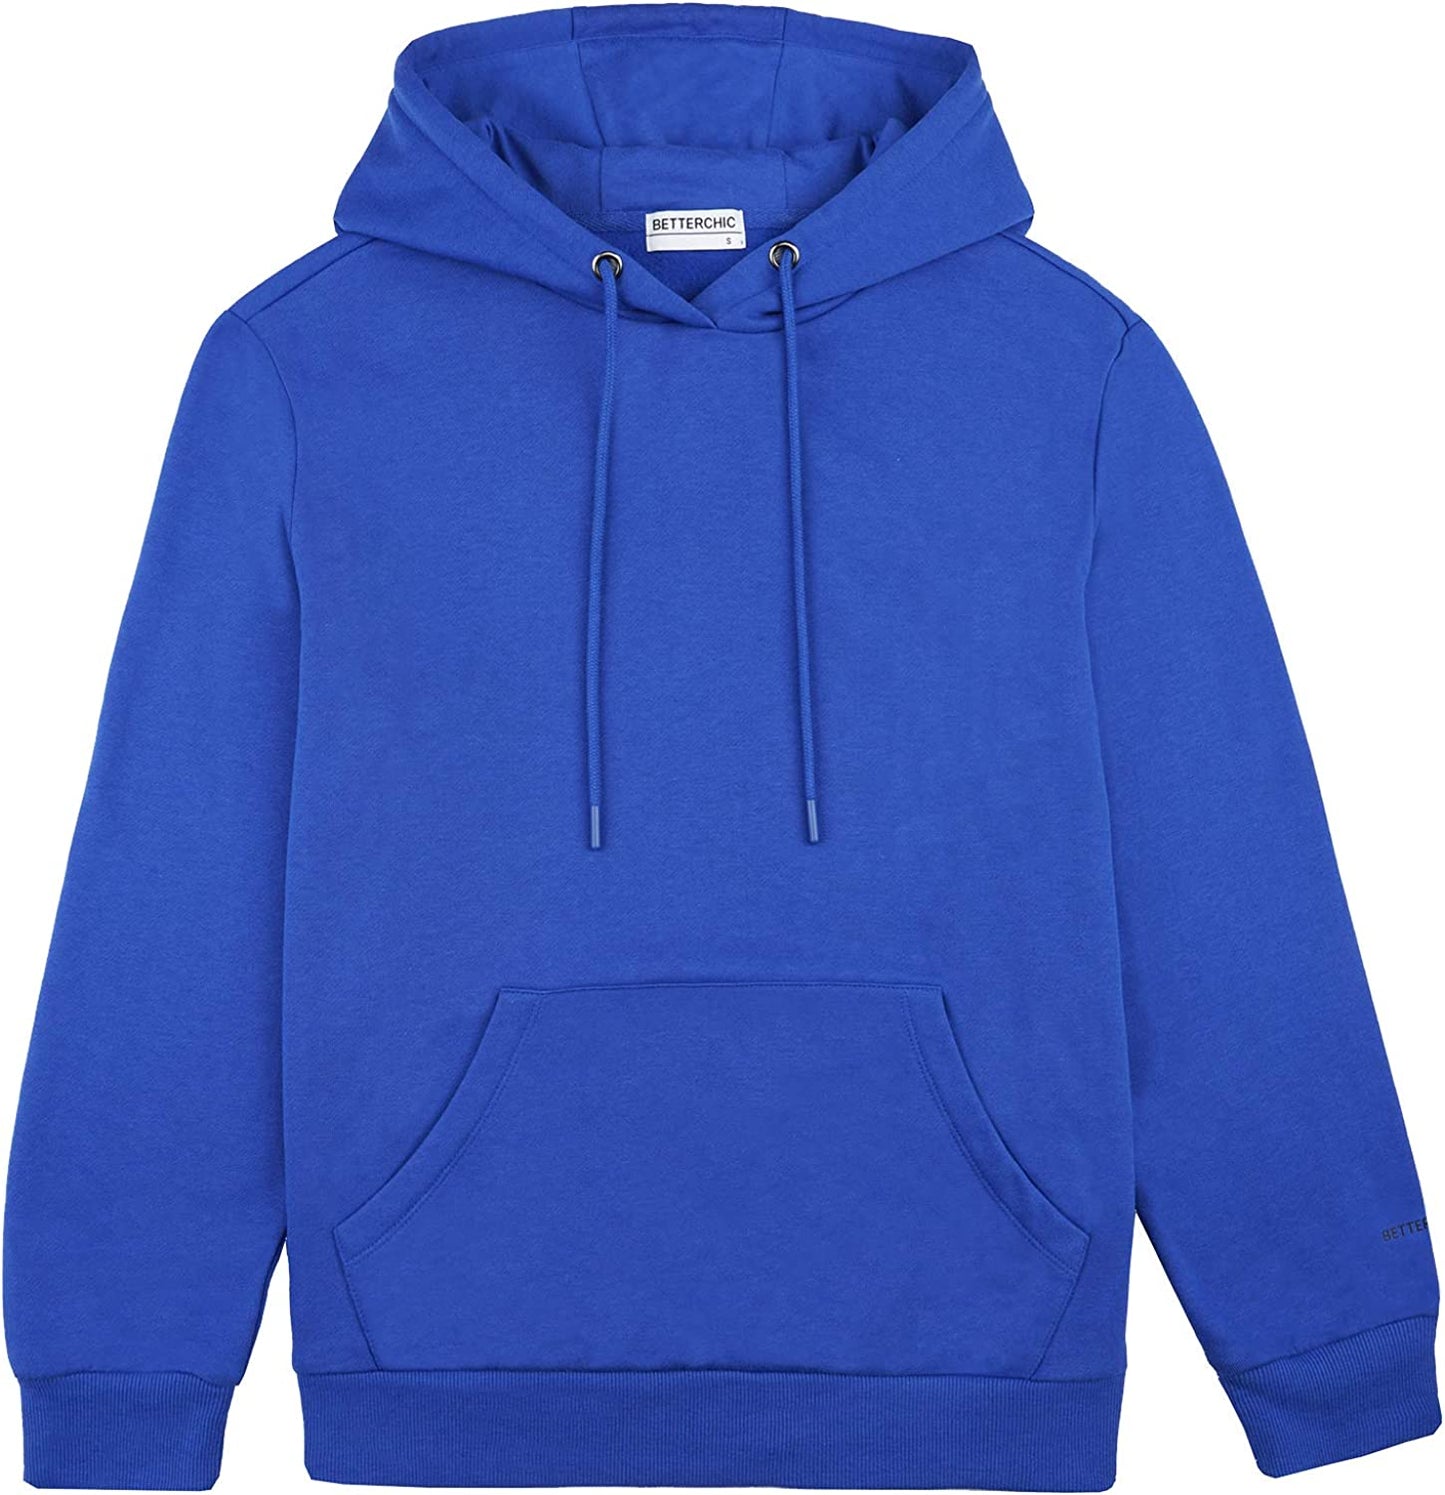 Custom Men's Hoodie Sweatshirts Promotional Long Sleeve Soft Brushed Fleece Hoody Classic Drawstring Pullover